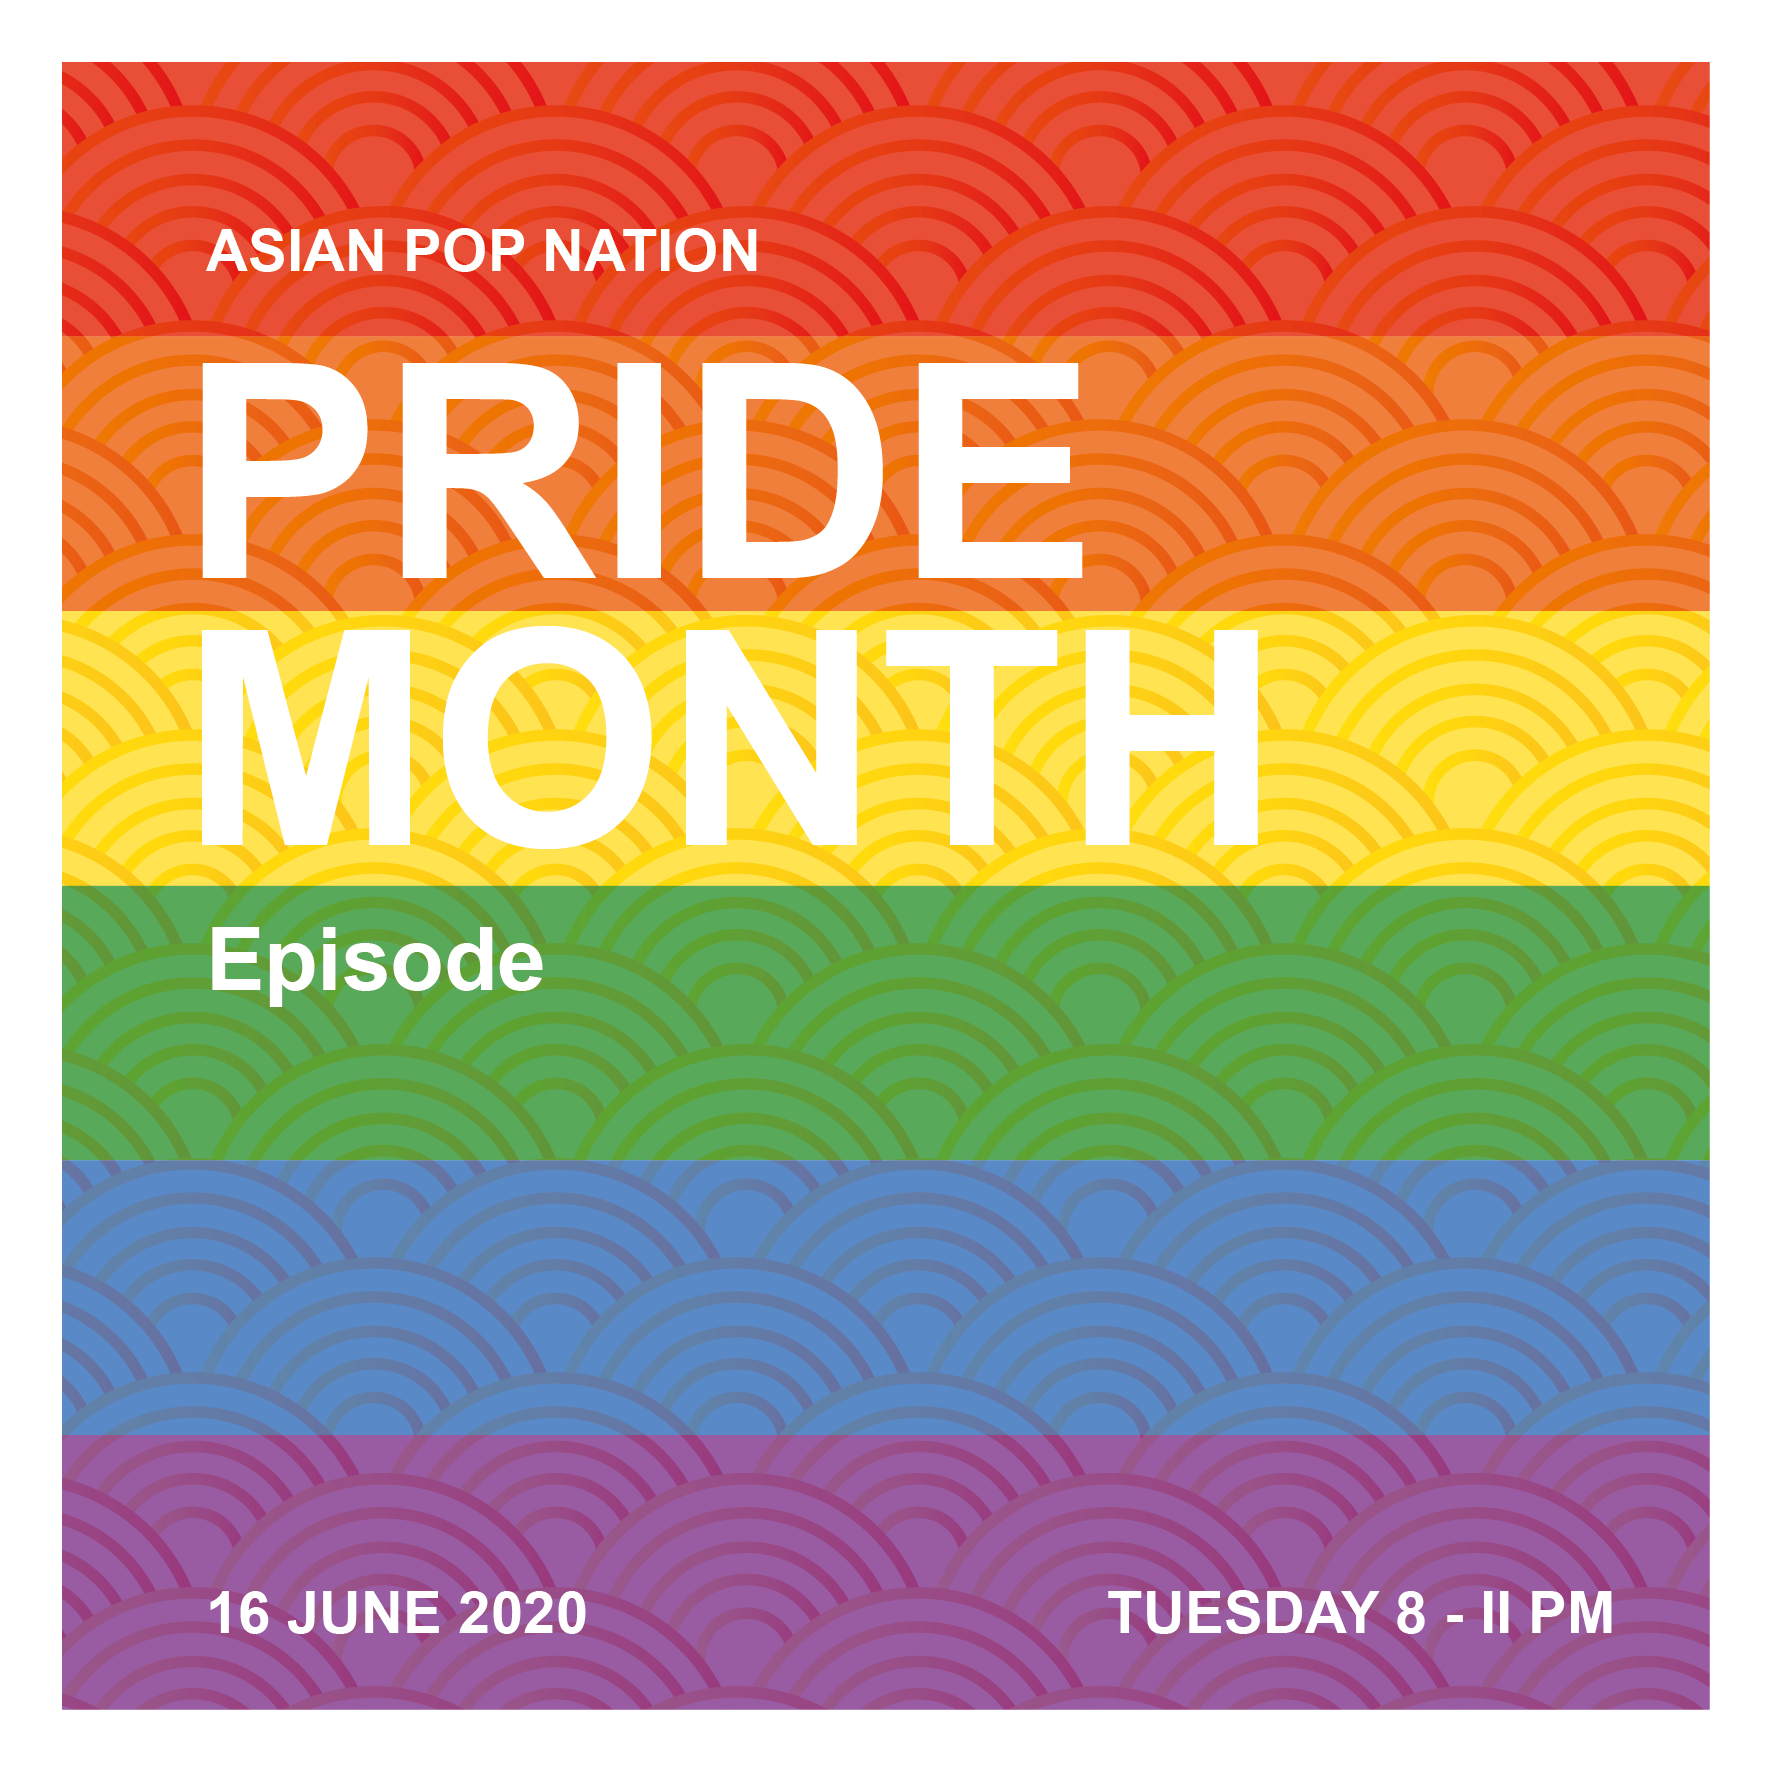 APN Season 2: Episode 9 (16/06/20) - Pride Month Episode